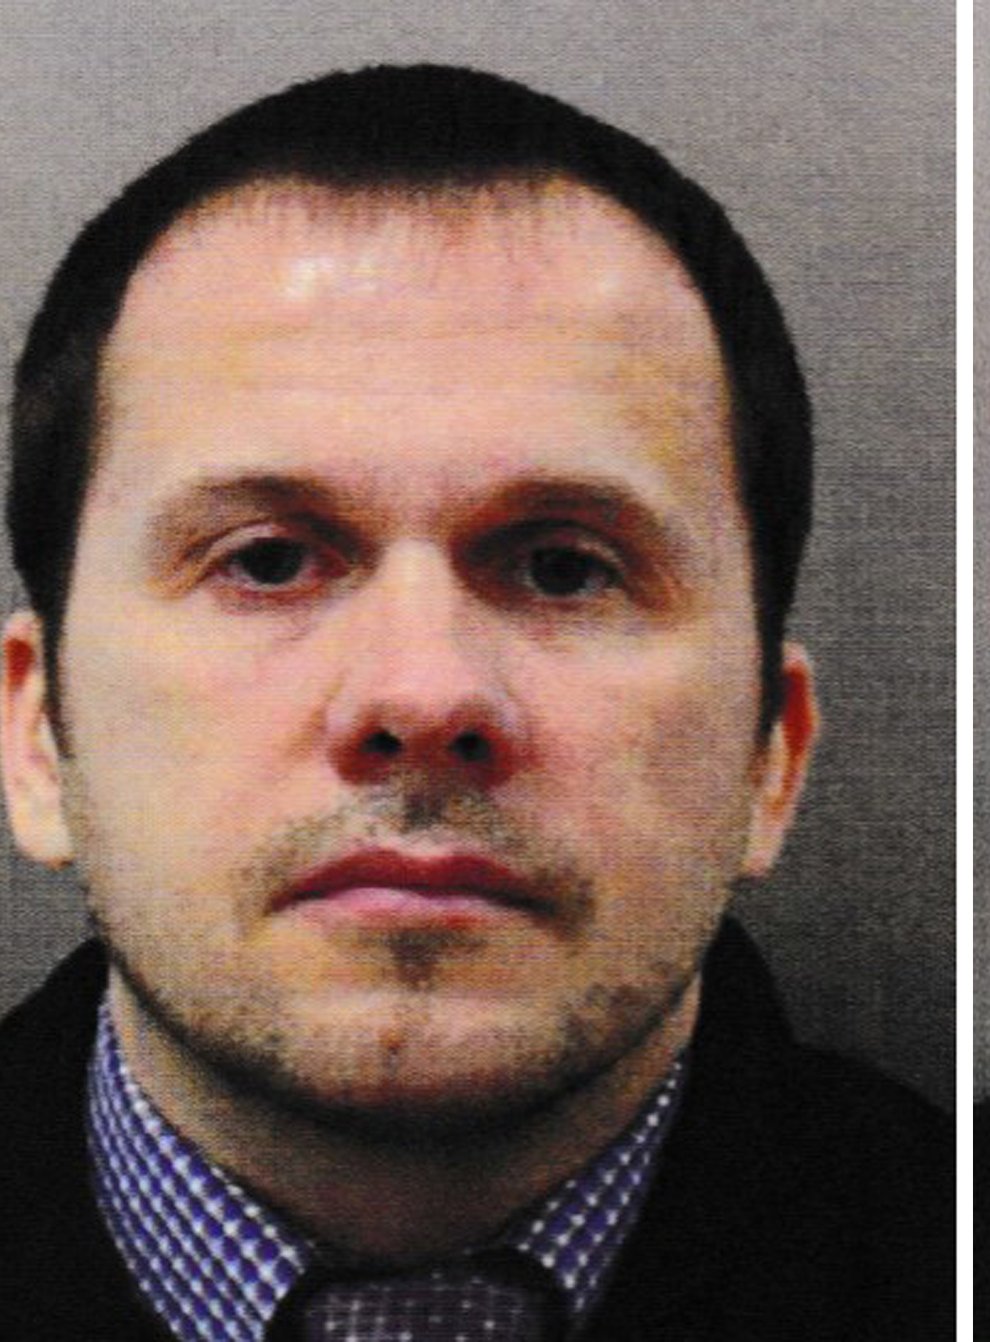 Salisbury poisoning suspects Alexander Petrov and Ruslan Boshirov